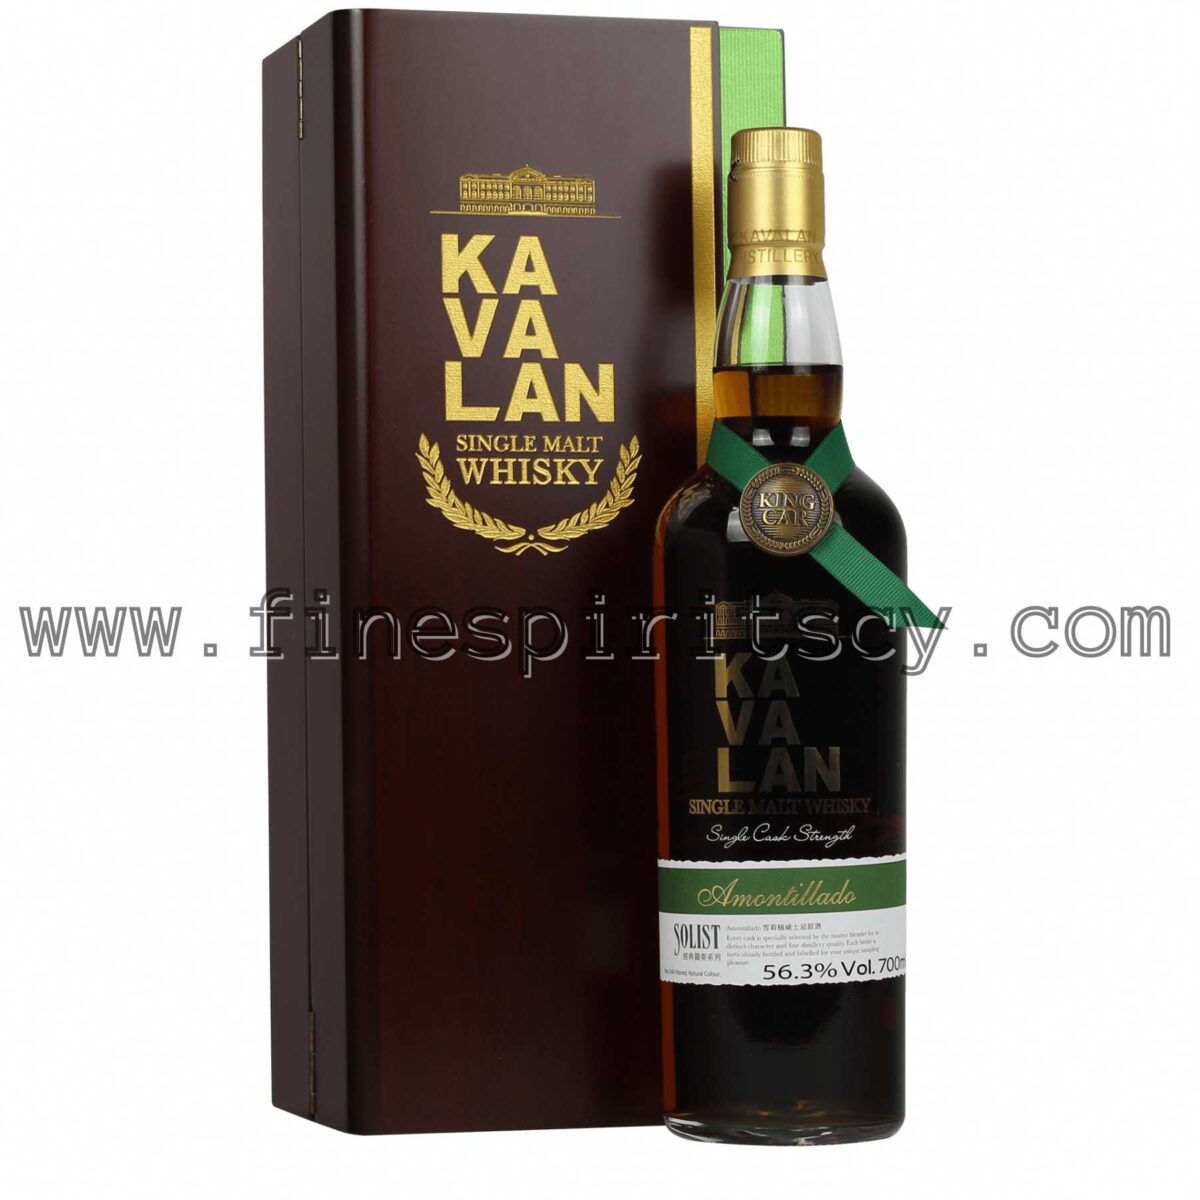 Kavalan Solist Amontillado Single Cask Strength Sherry Cyprus Whisky Price